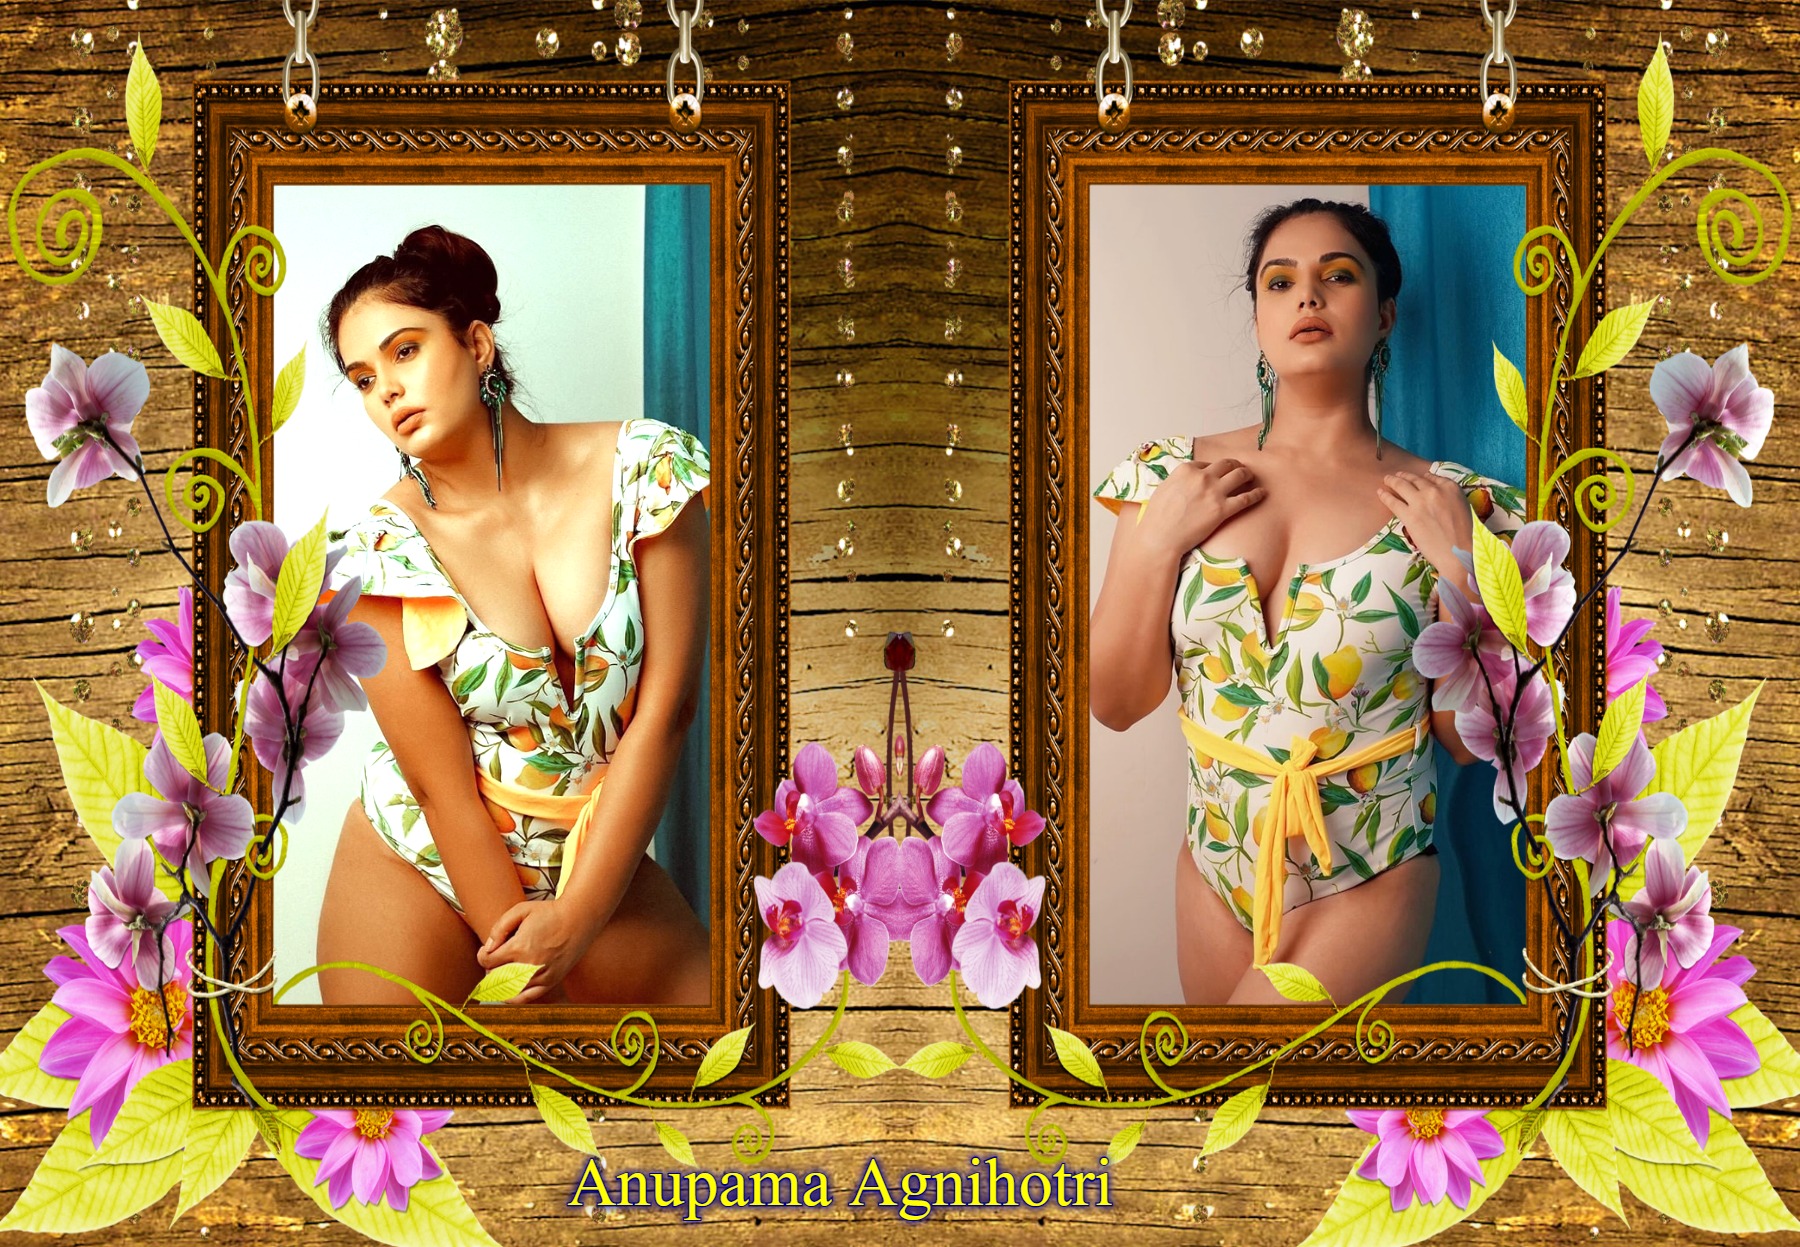 You are currently viewing “Anupama Agnihotri’s Mouth Watering Bikini Shoot”